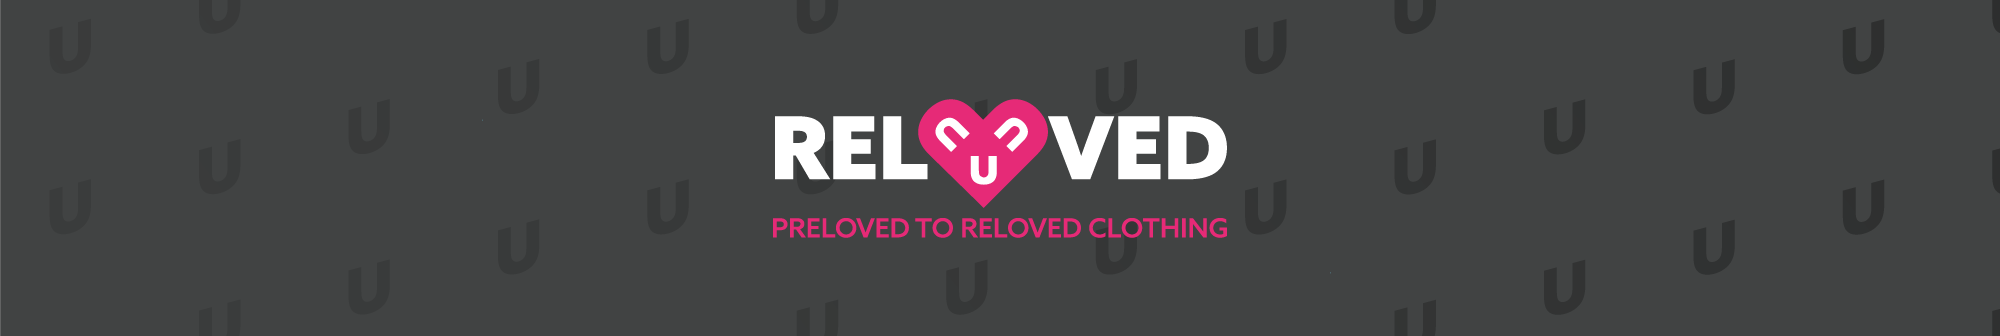 Re:Loved Logo - Preloved to Reloved Clothing